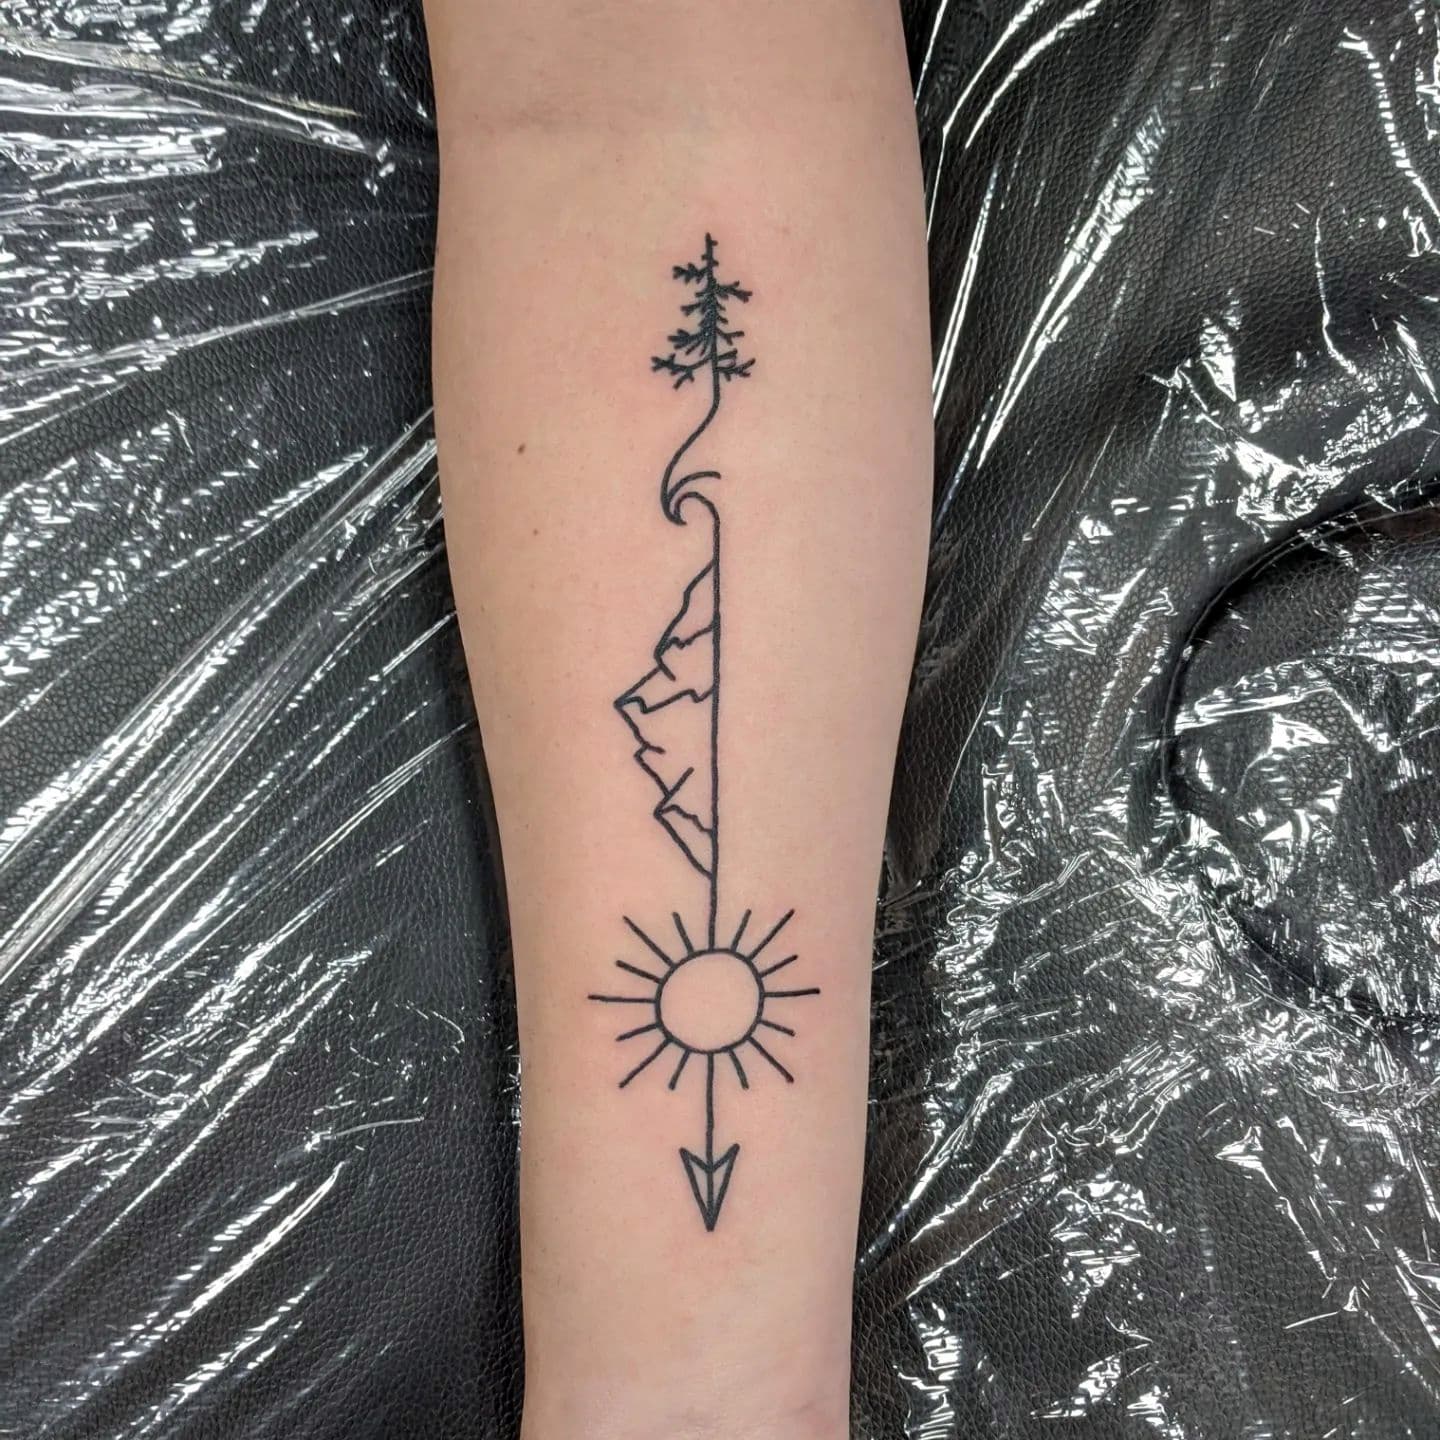 Tatuaje único de una flecha con brújula